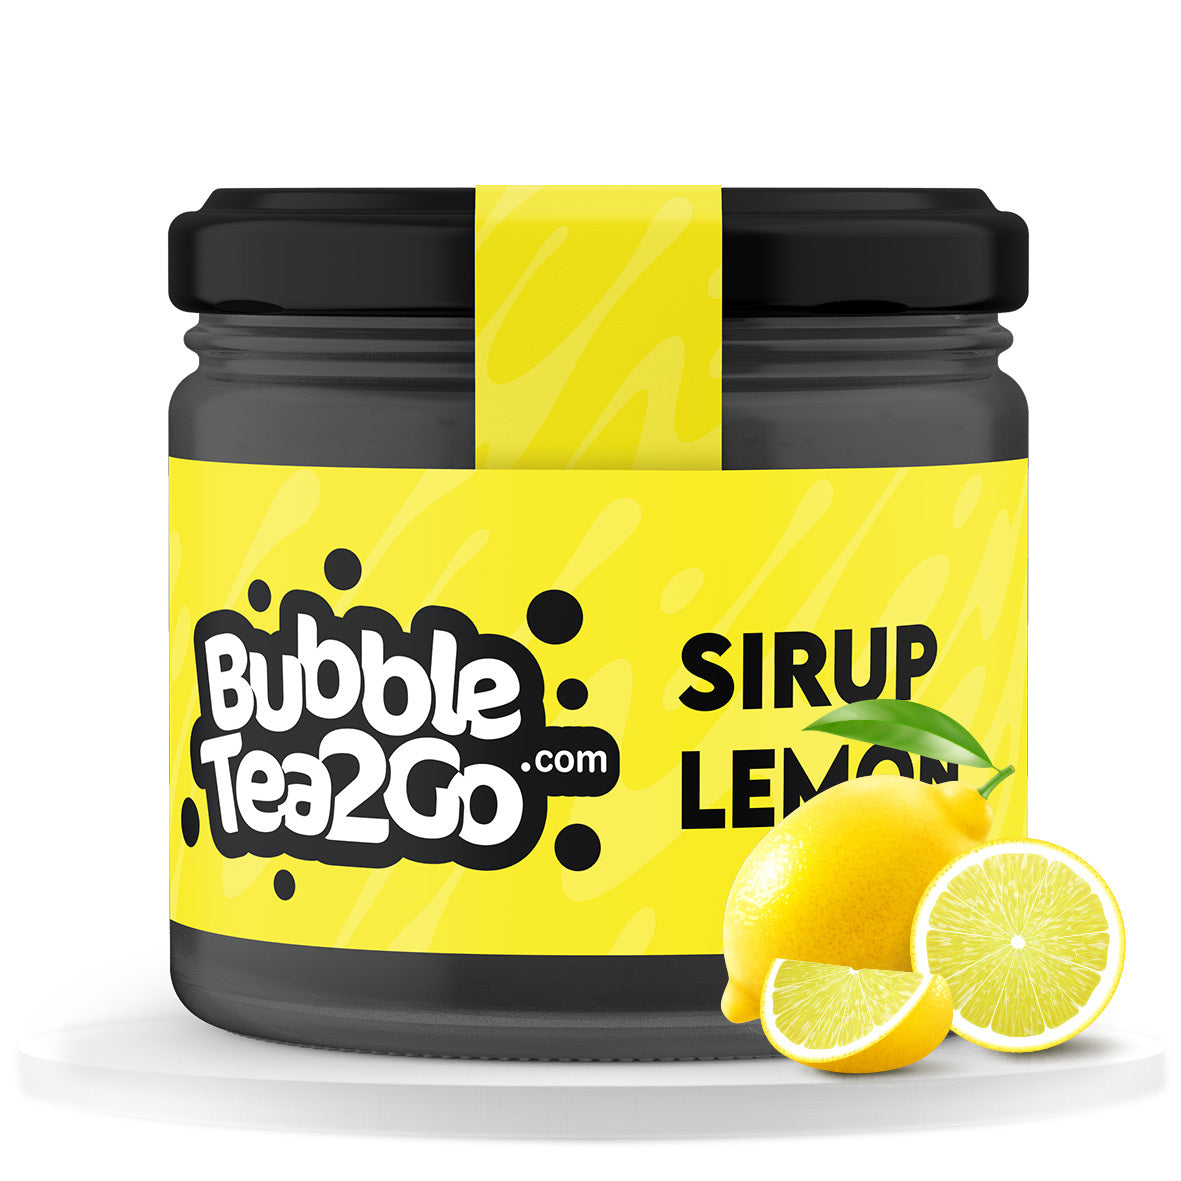 Sirop - Lemon 2 portions (50g)